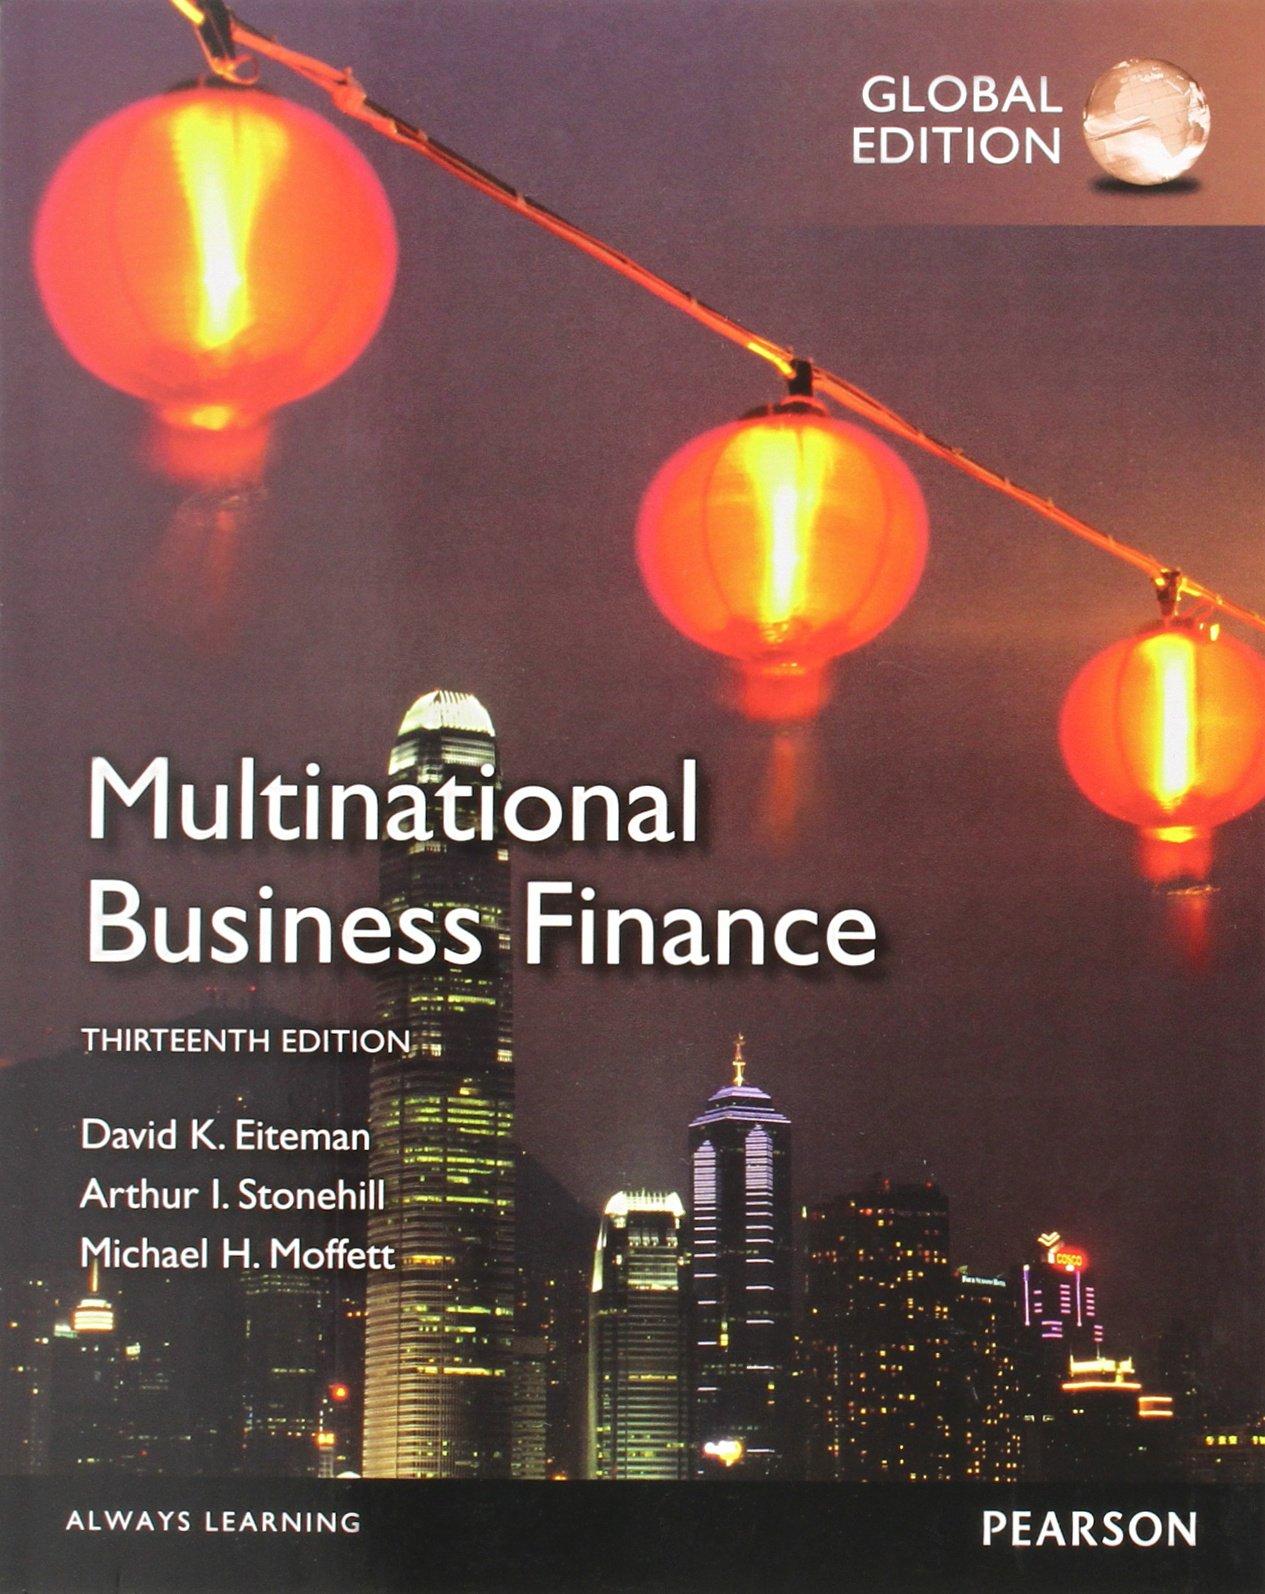 multinational business finance 13th global edition david k. eiteman, arthur i. stonehill, michael h. moffett